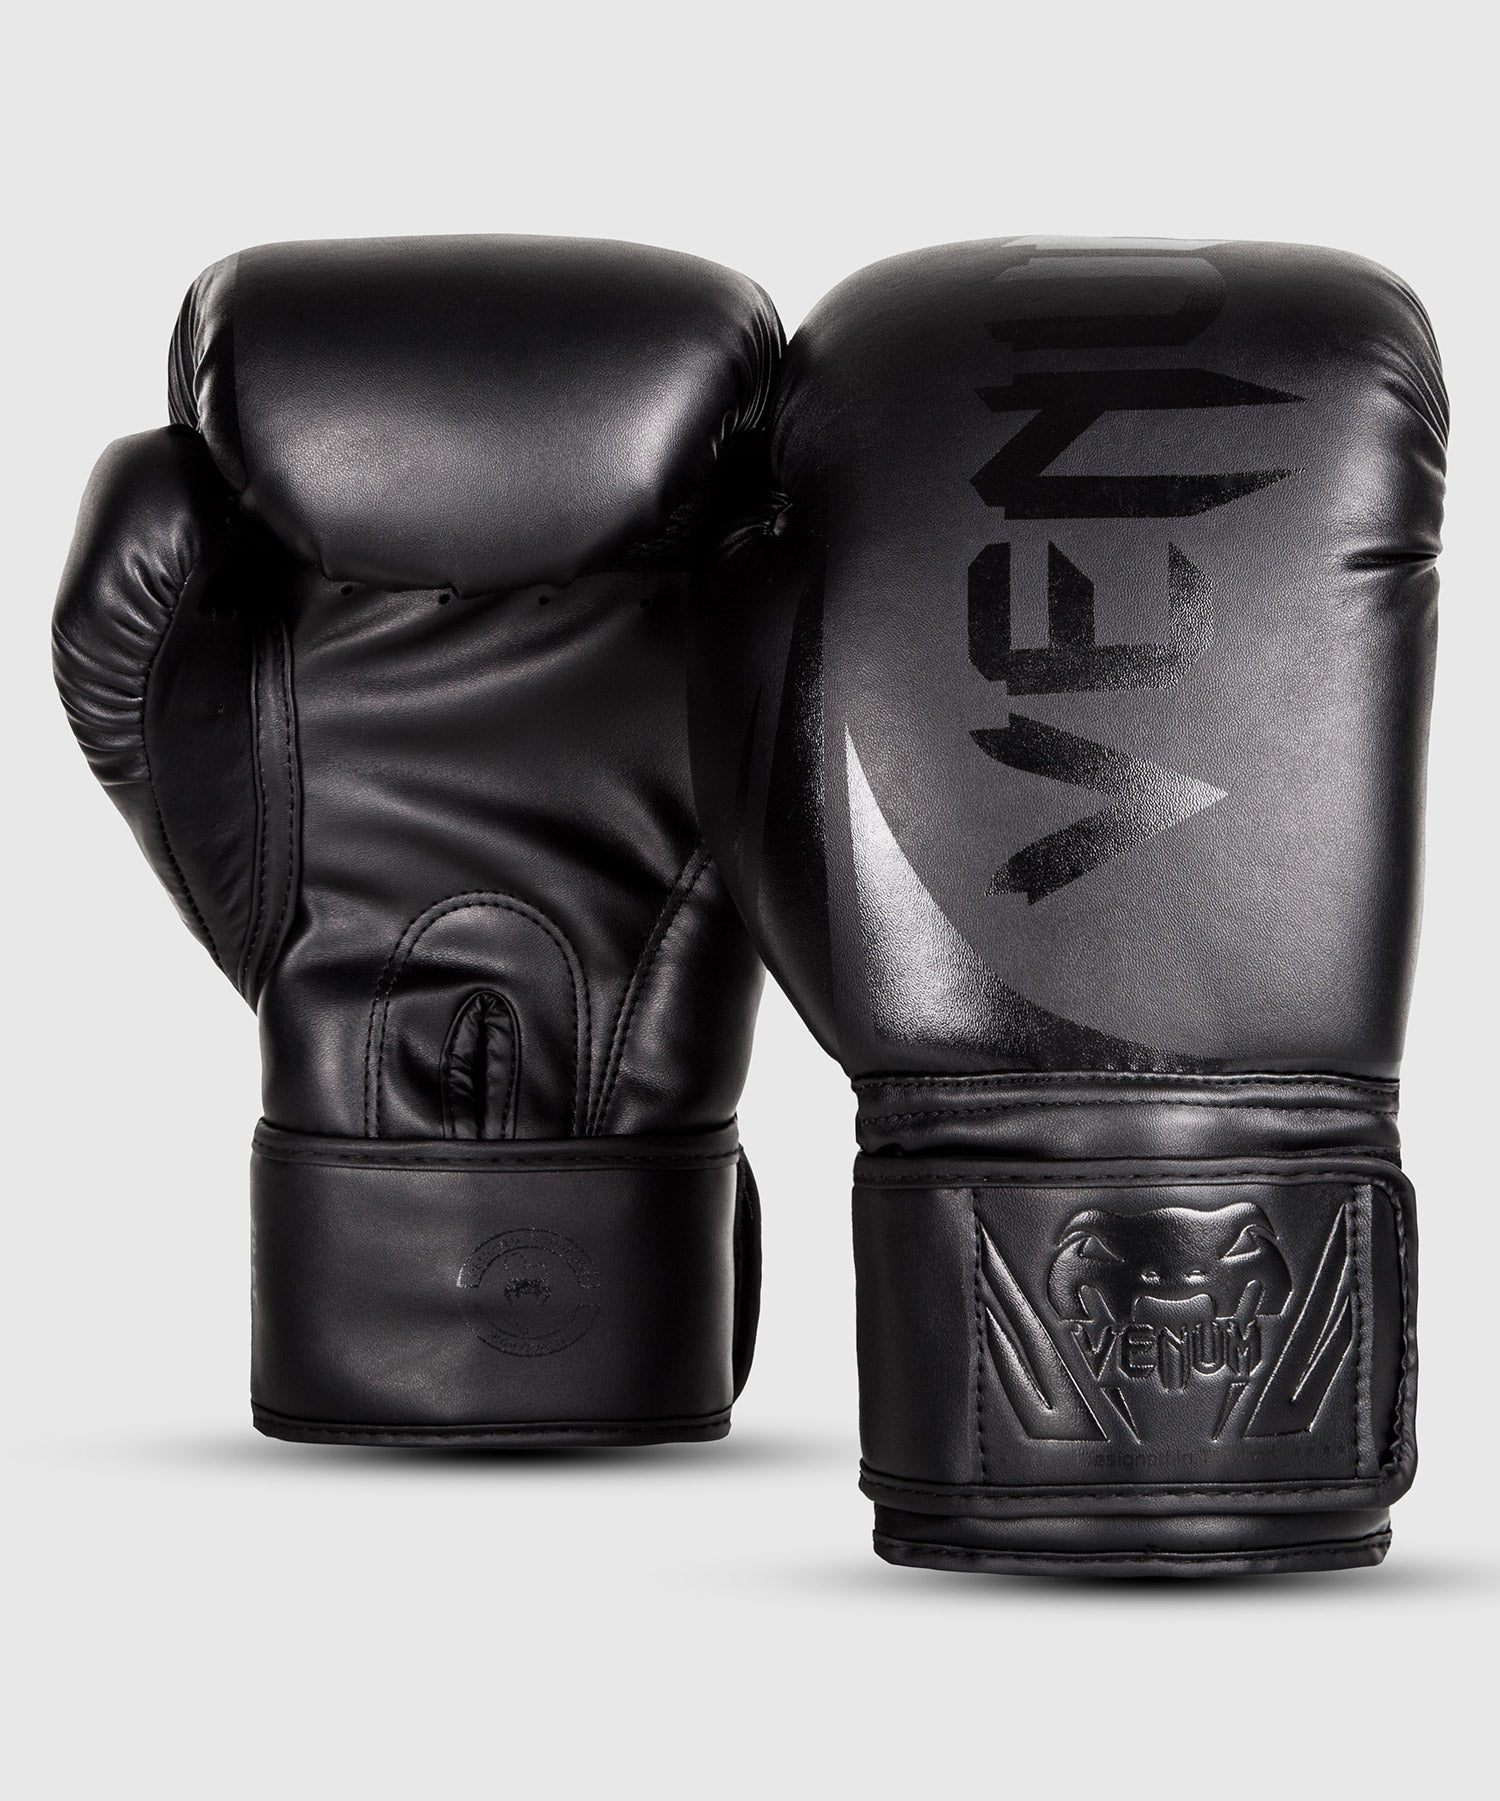 Venum Challenger 2.0 Boxing Gloves - Black/Black - Venum